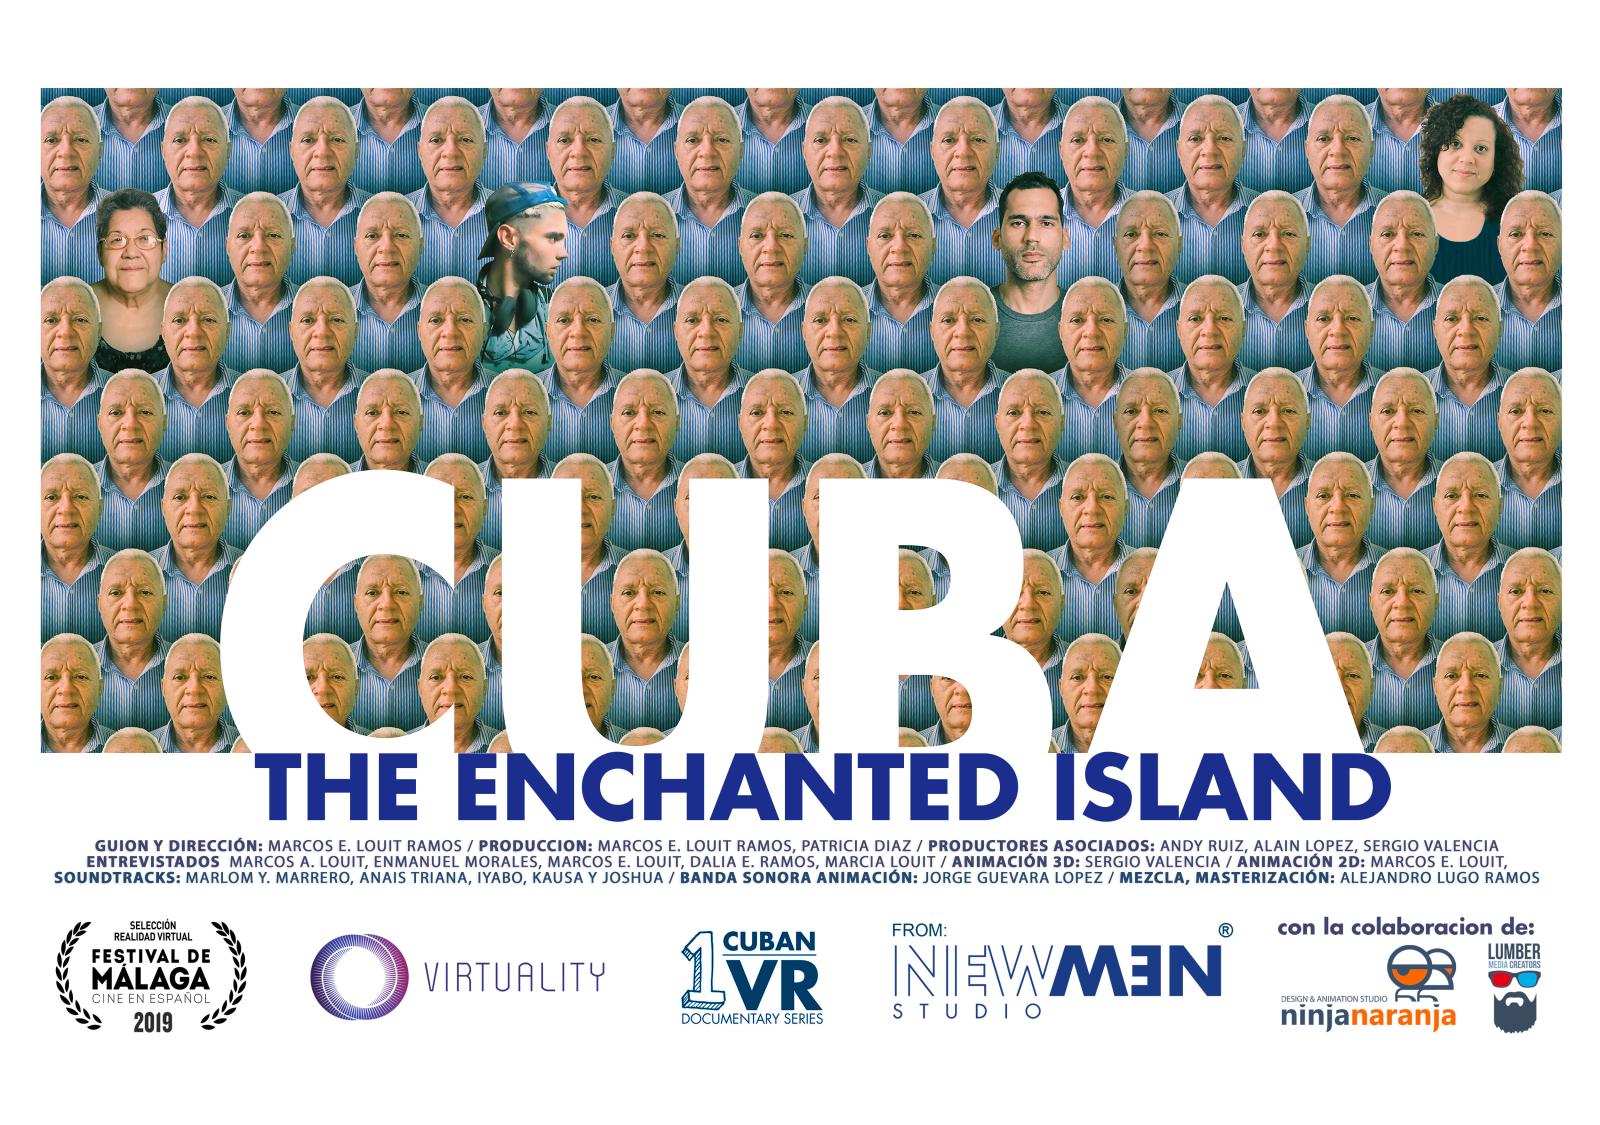 Cuba, the enchanted island | Buy this image